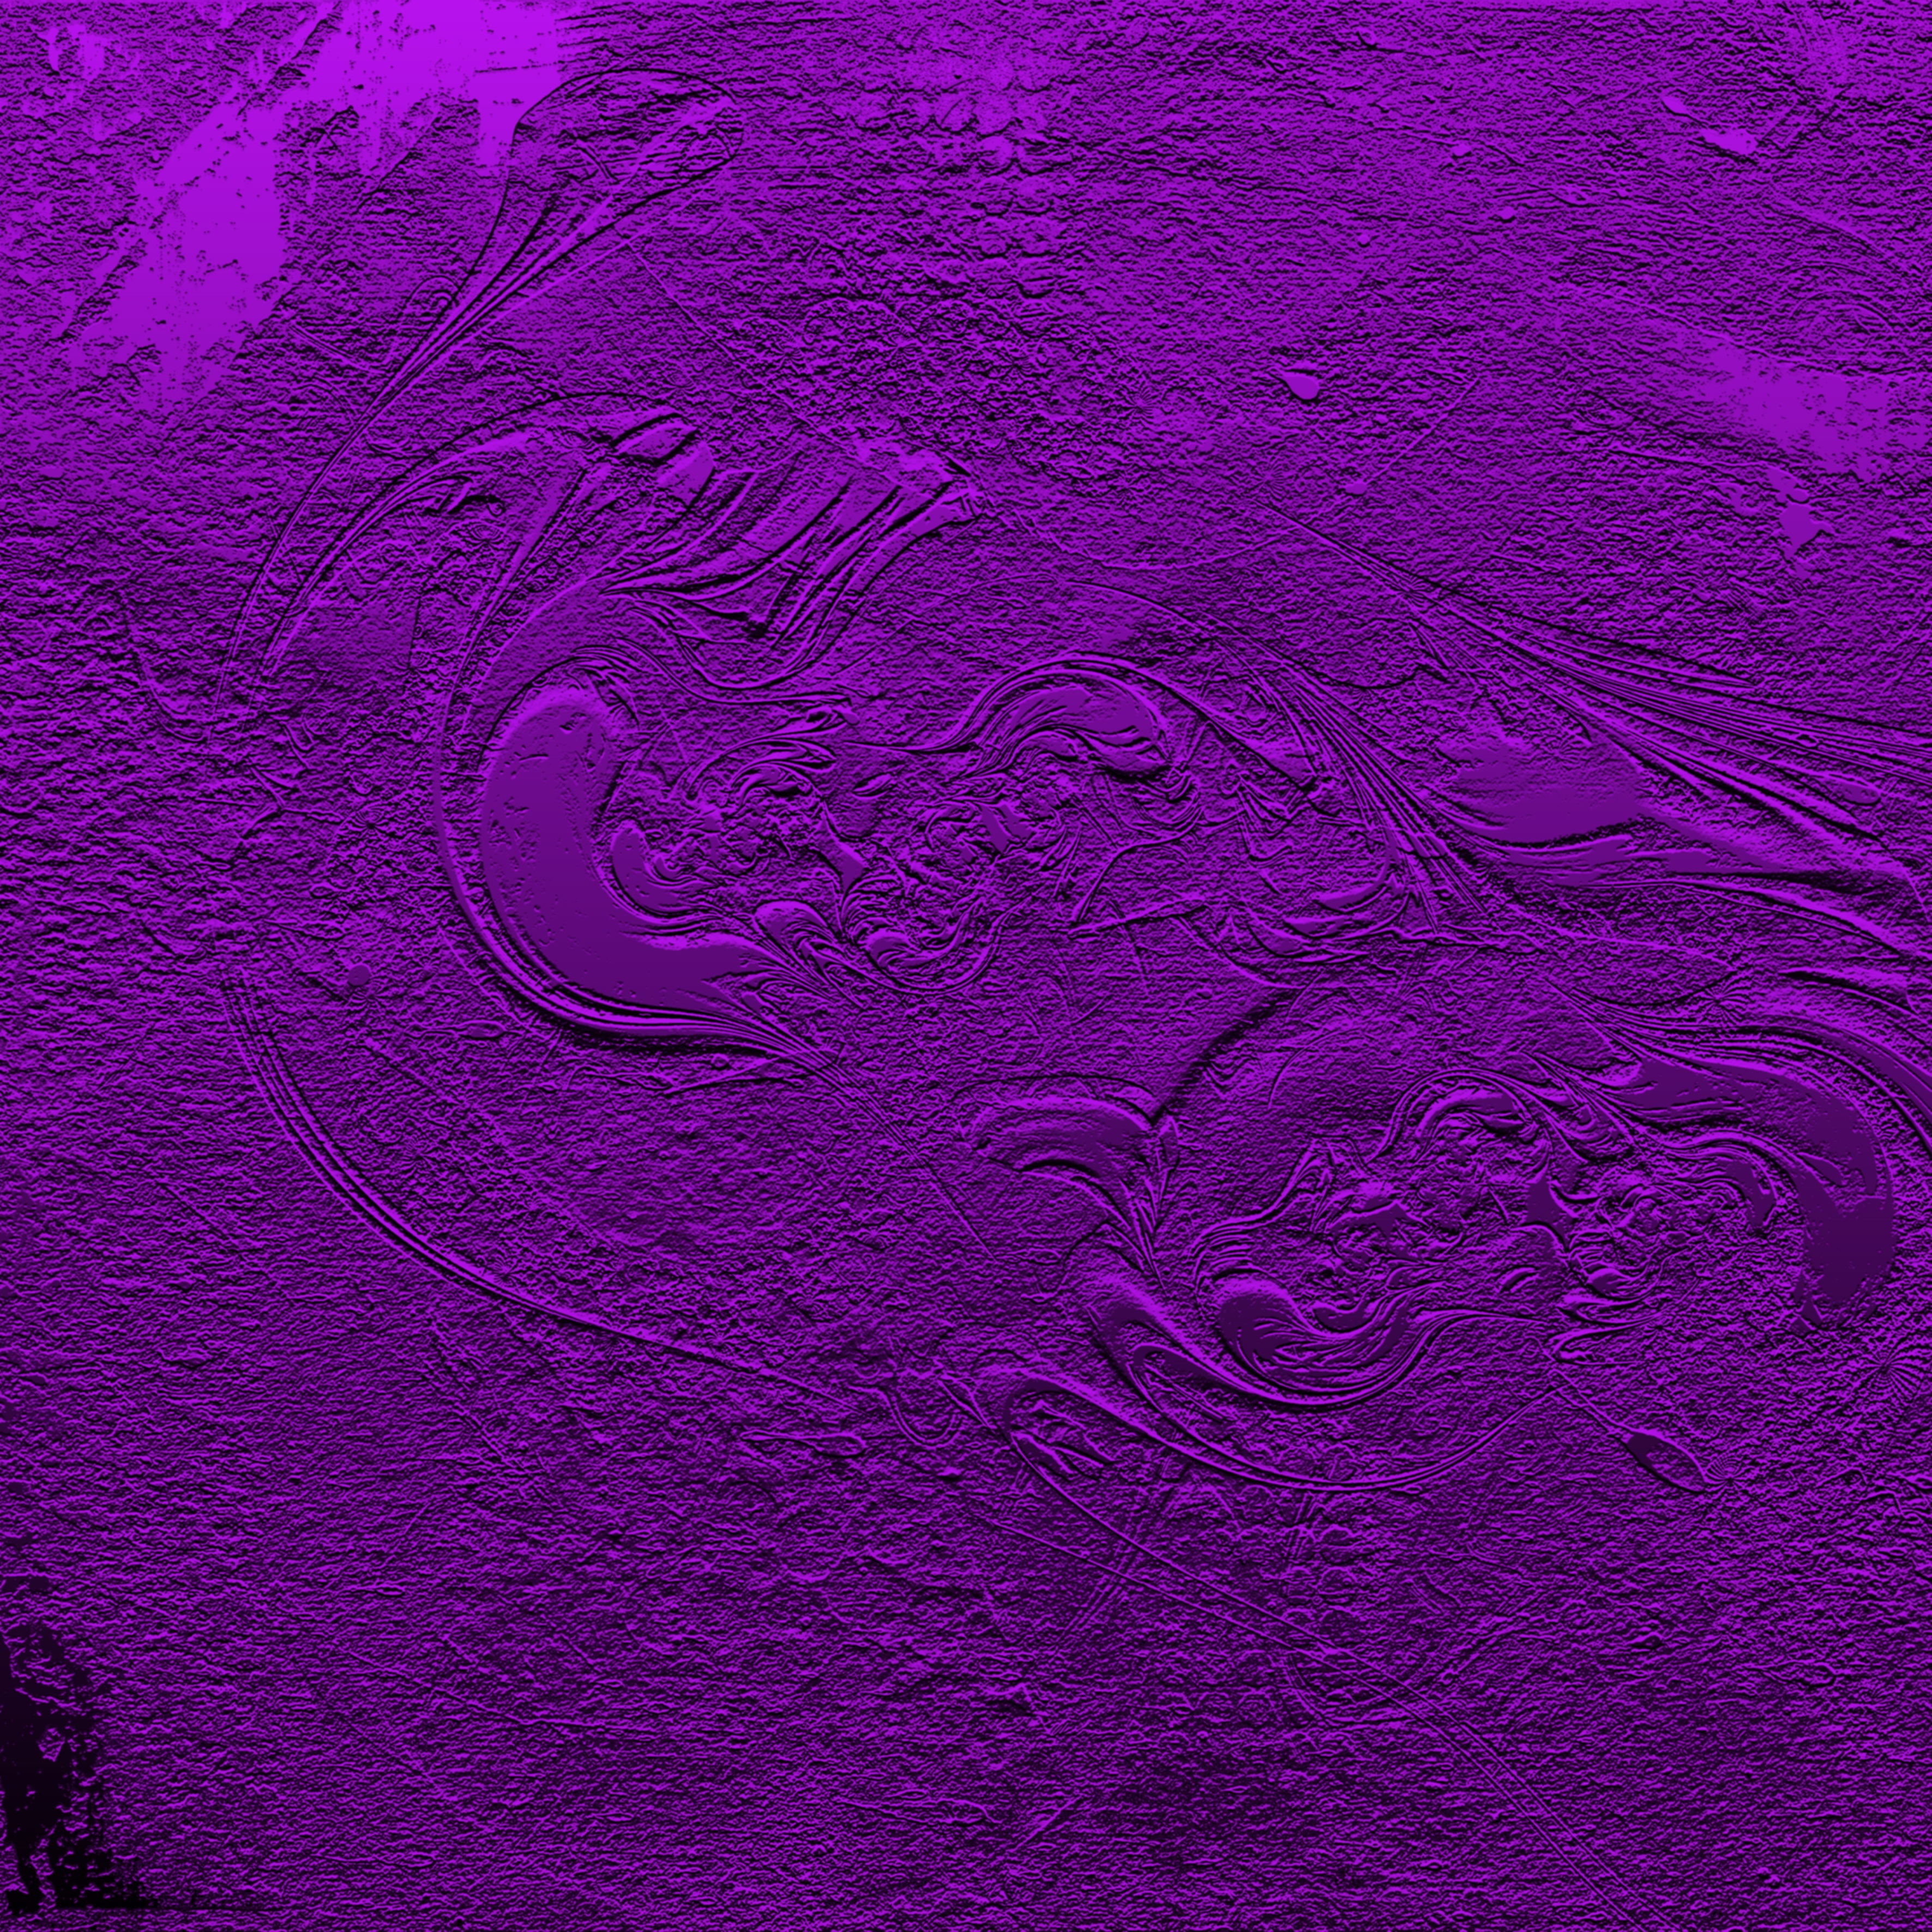 textures, violet, patterns, texture, irregularities, purple phone background